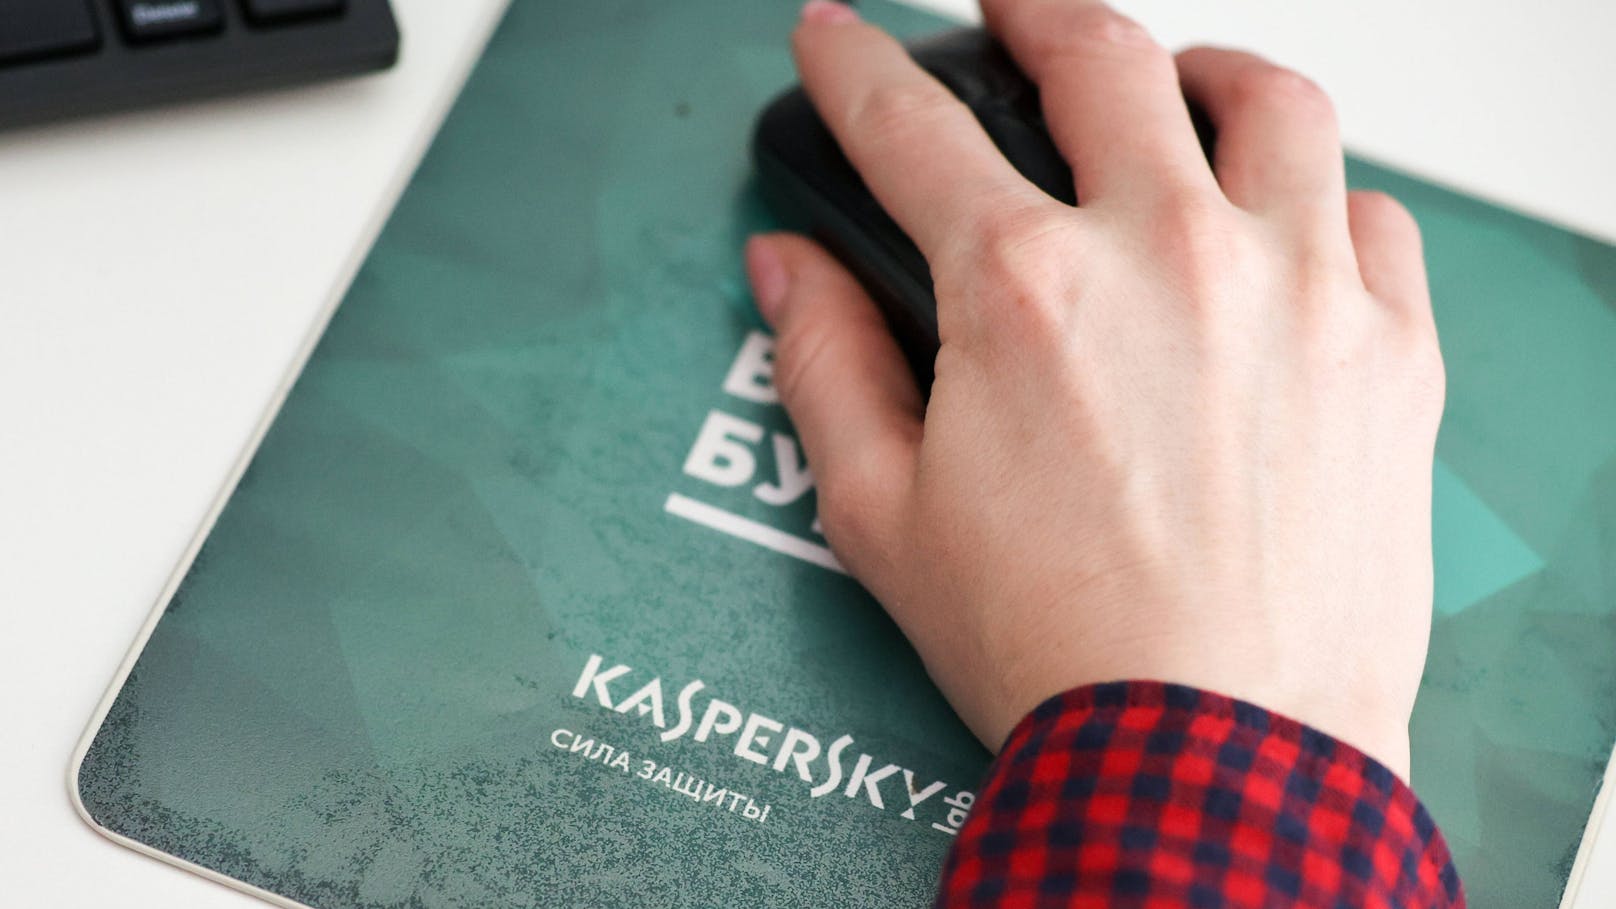 US-Regierung verbietet russische Software Kaspersky